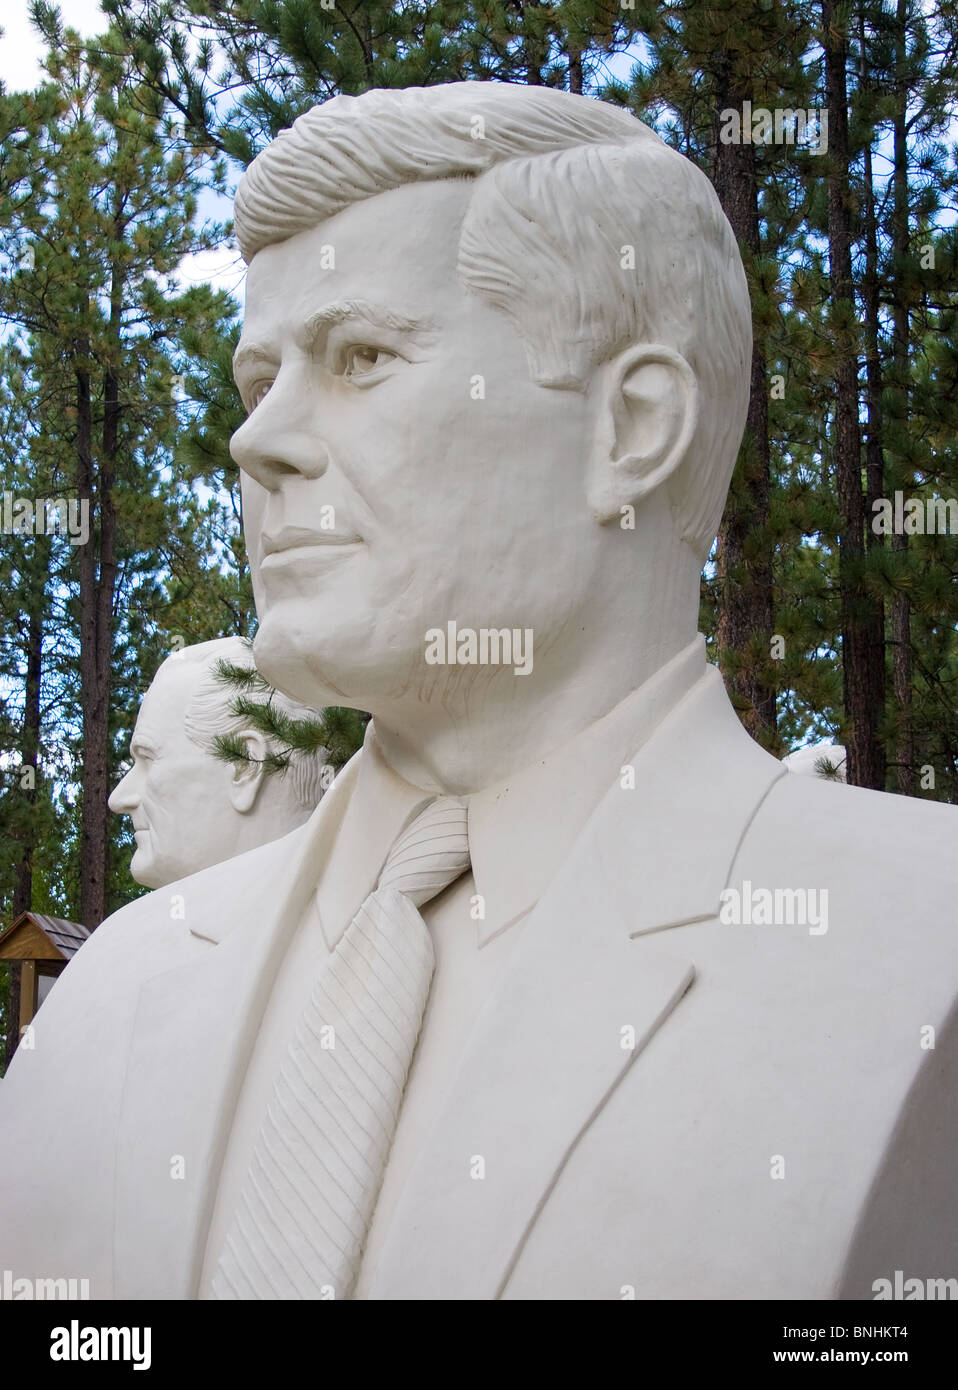 John F. Kennedy bust by sculptor David Adickes at Presidents Park in Lead South Dakota Stock Photo